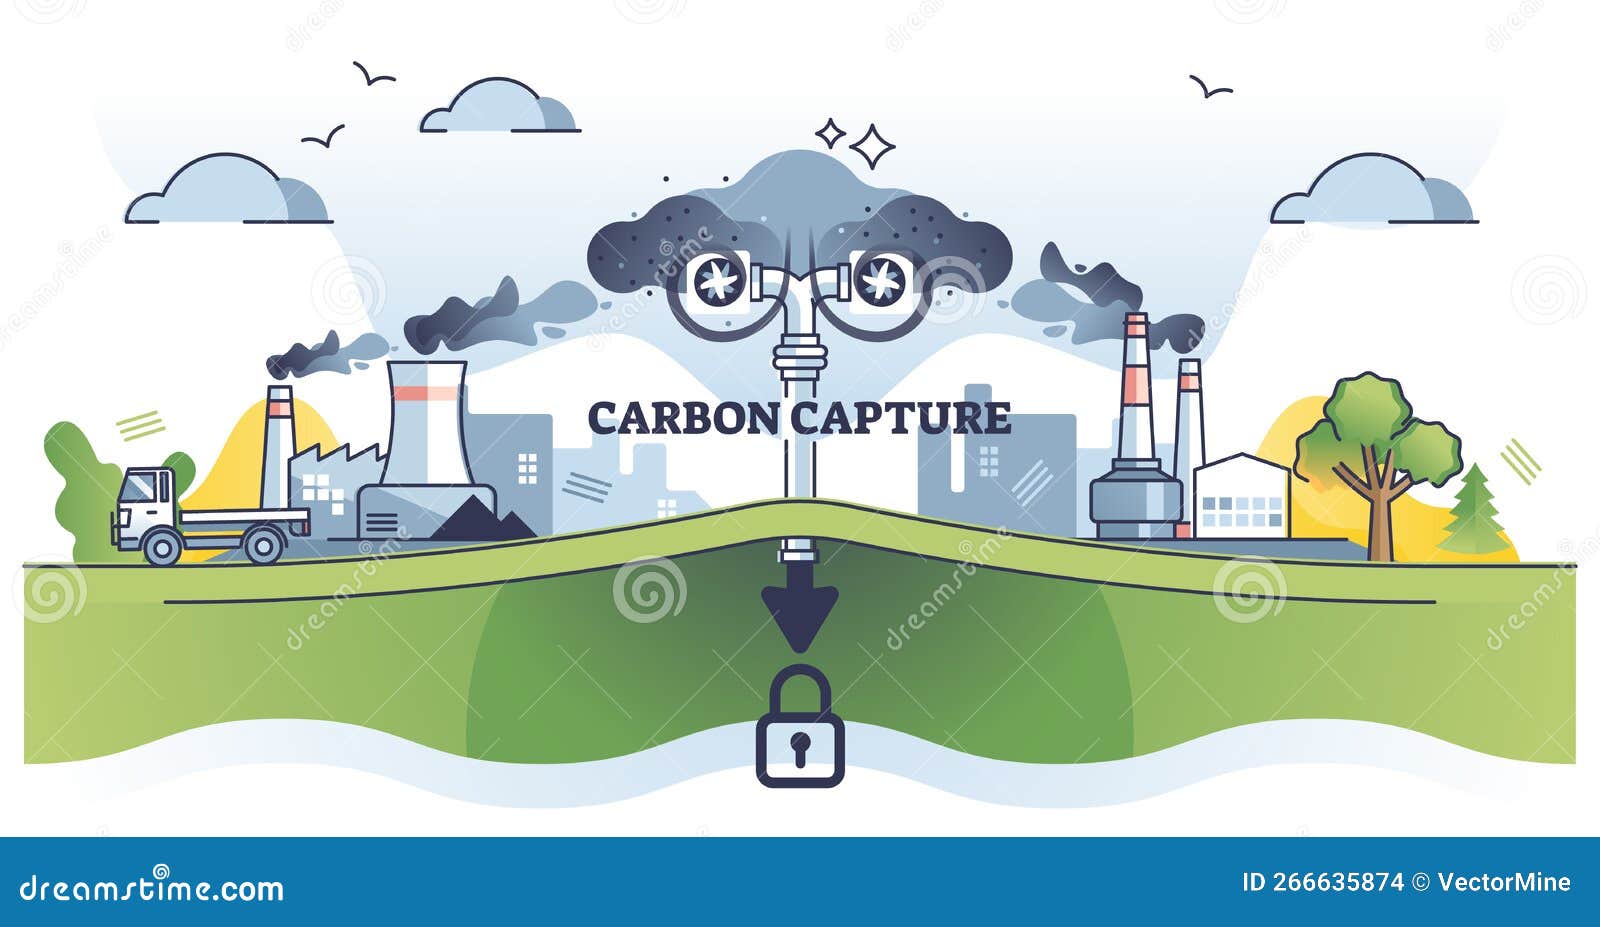 carbon capture method for co2 exhaust storage underground outline diagram